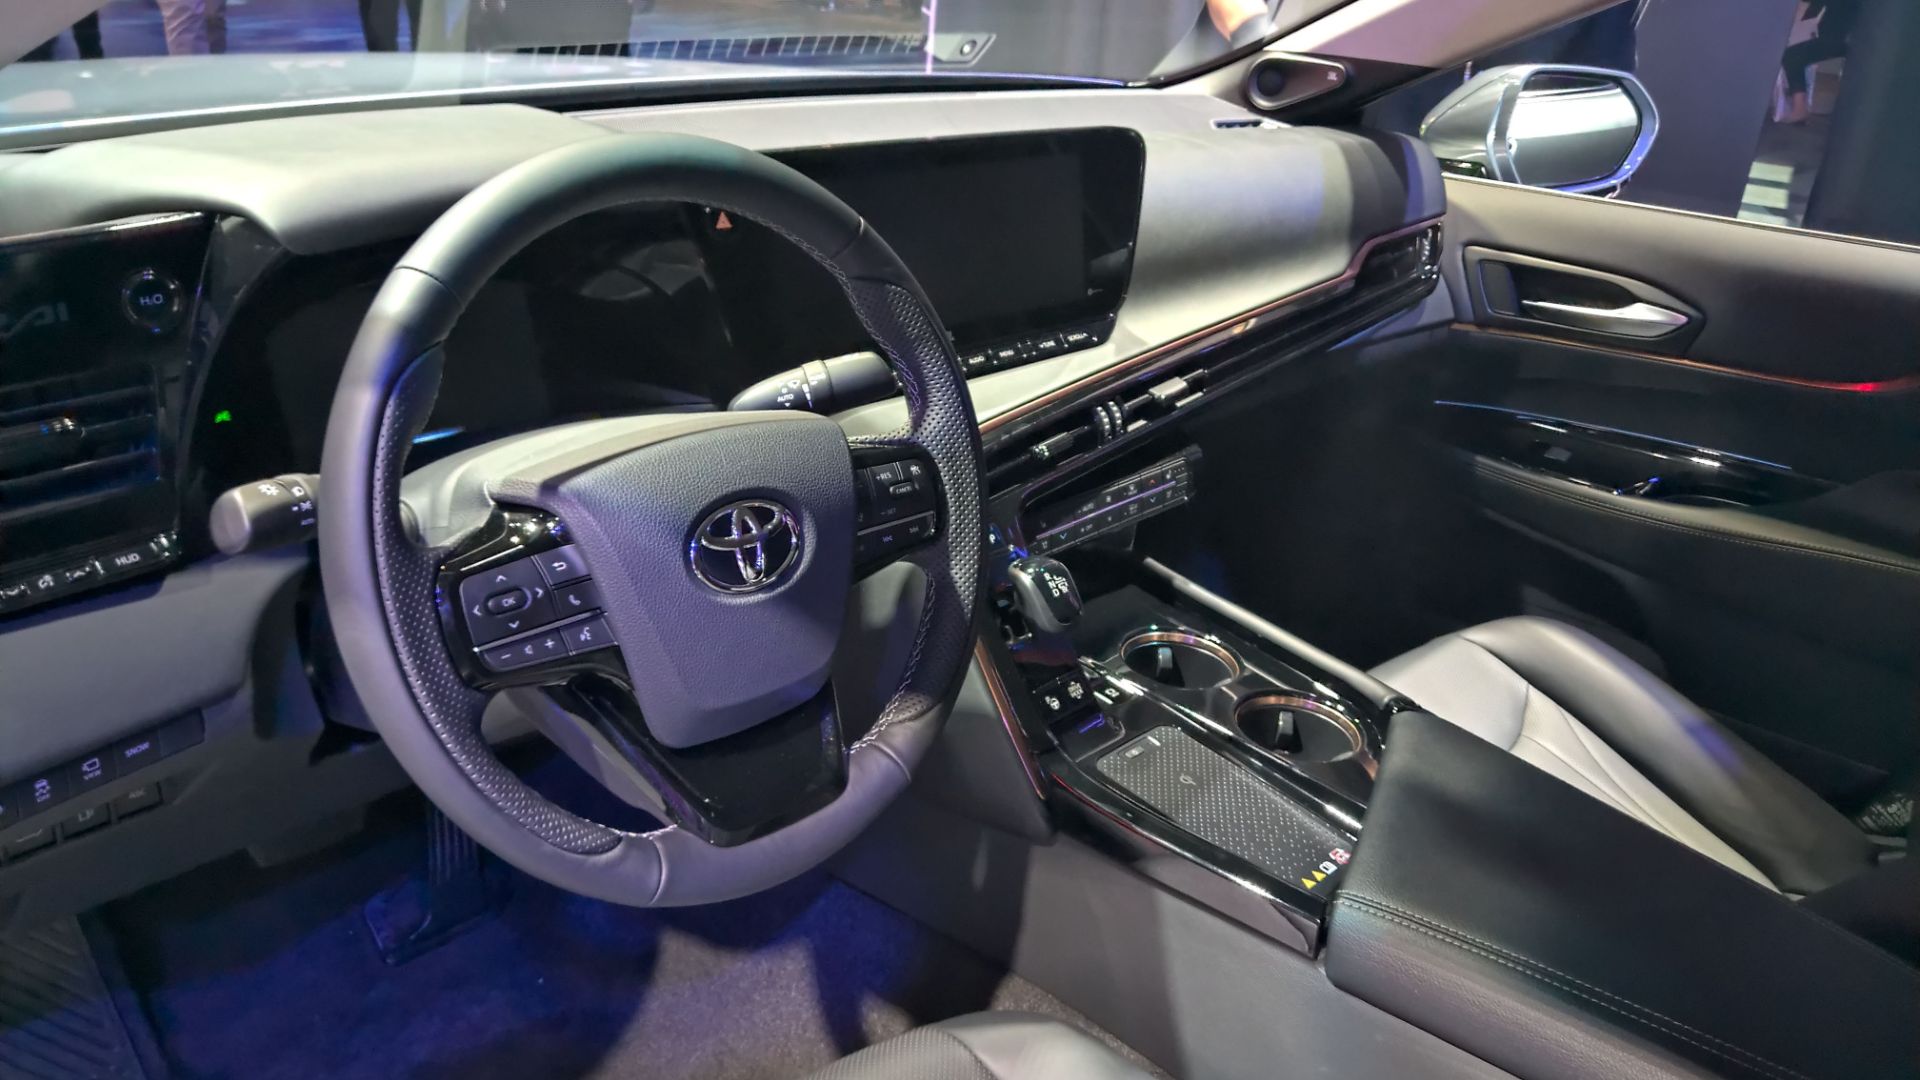 Toyota Mirai 2020 revealed